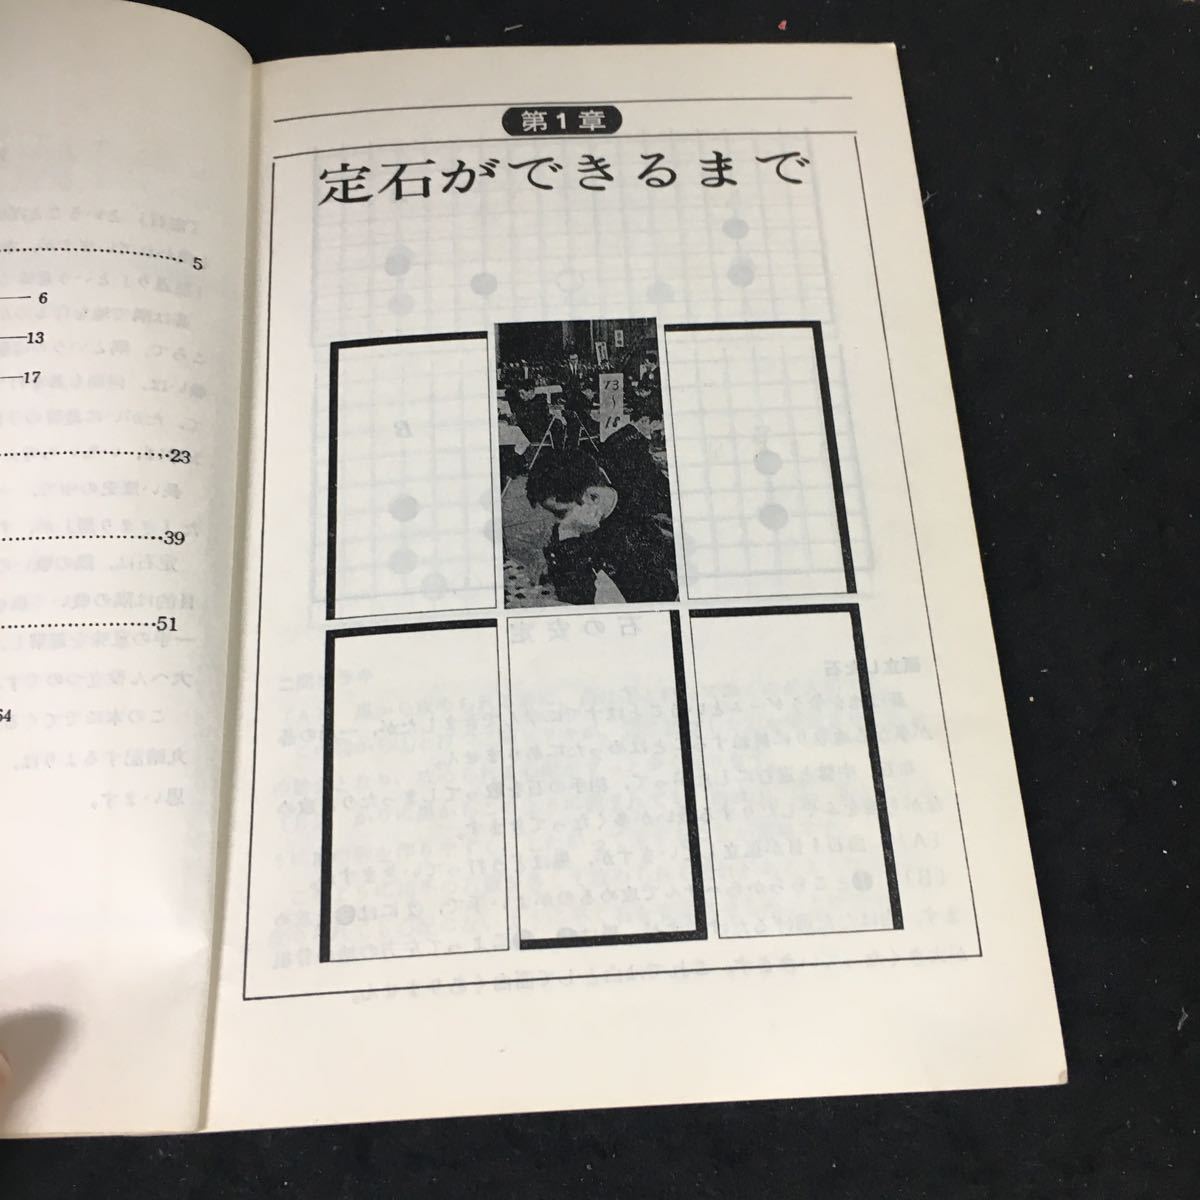 a-672 中・高生のための囲碁定石コース 財団法人日本棋院 昭和55年第13刷発行※12_画像3